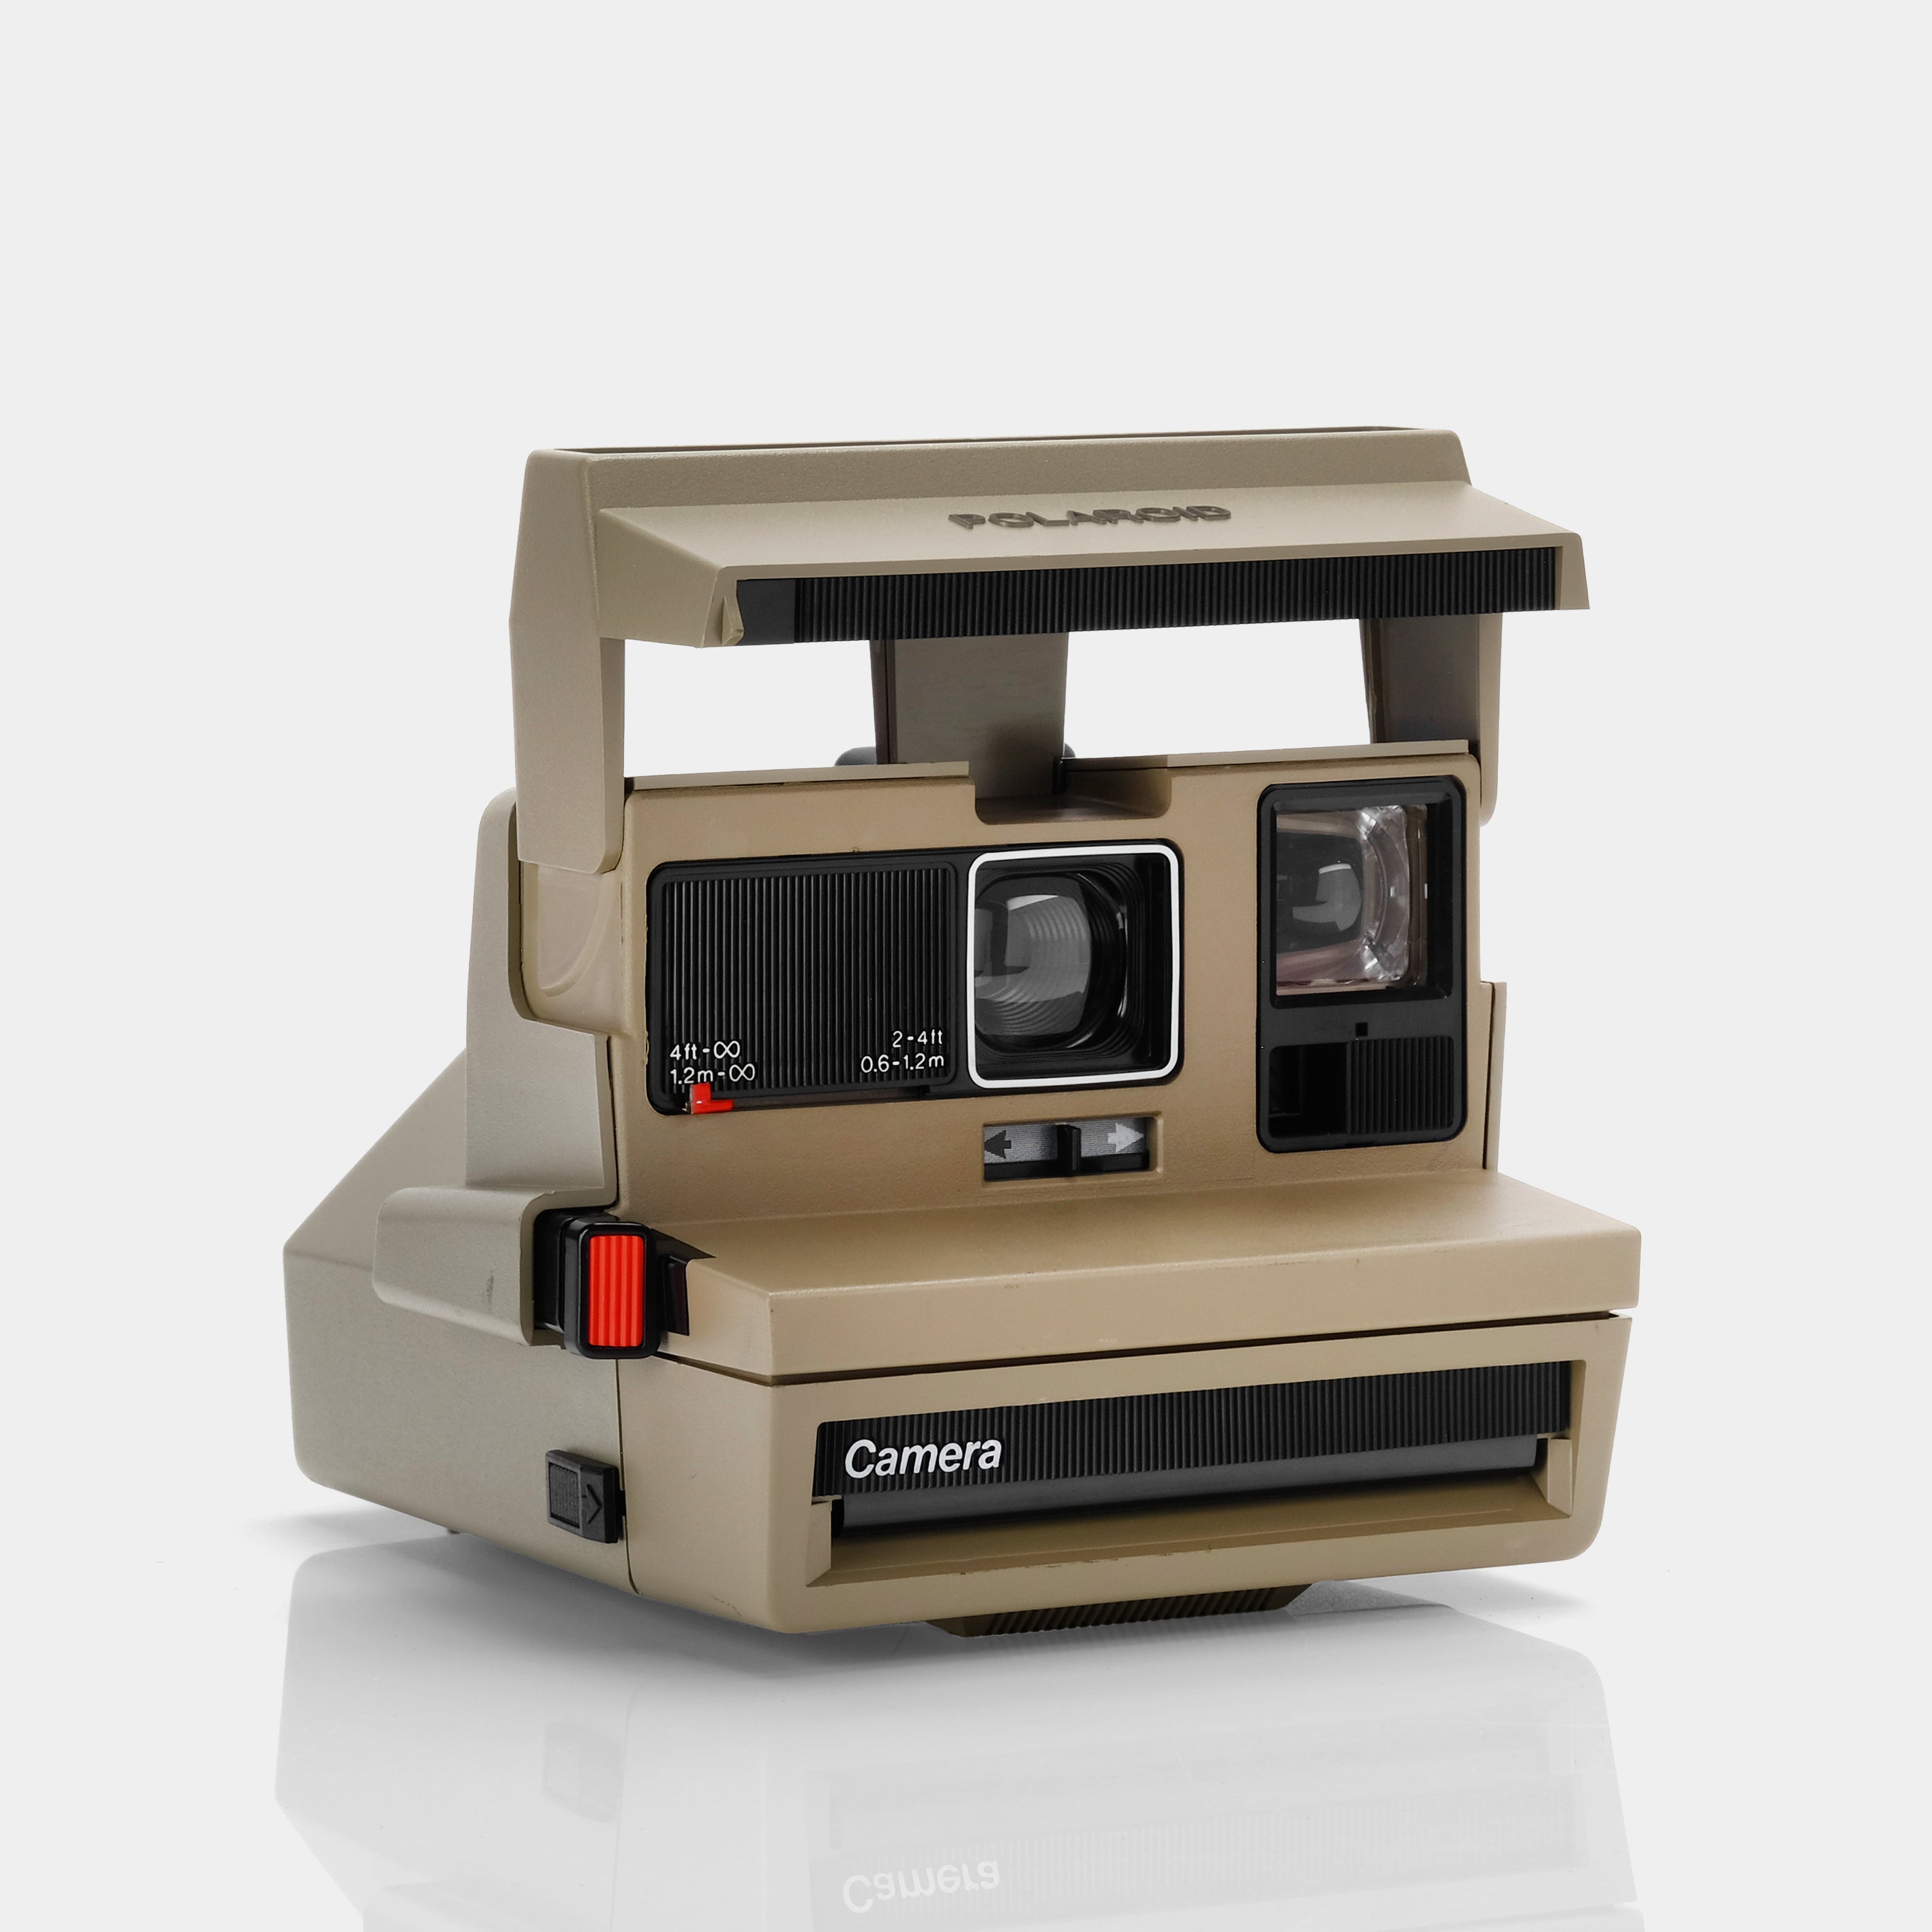 Rare Amigo Prototype "Camera" Polaroid 600 Tan Instant Film Camera